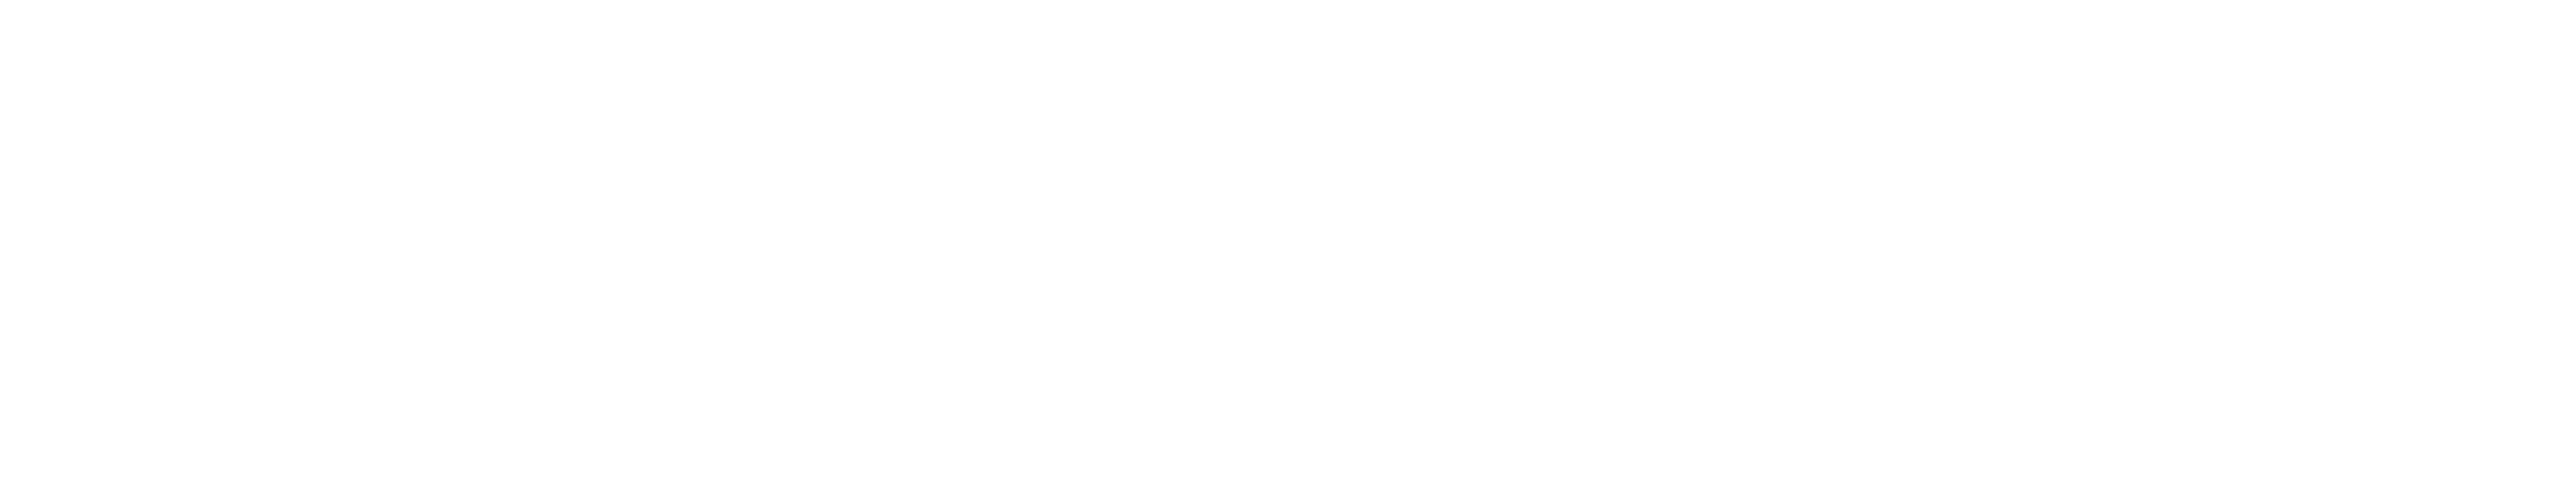 The Bren School of Environmental Science & Management logo